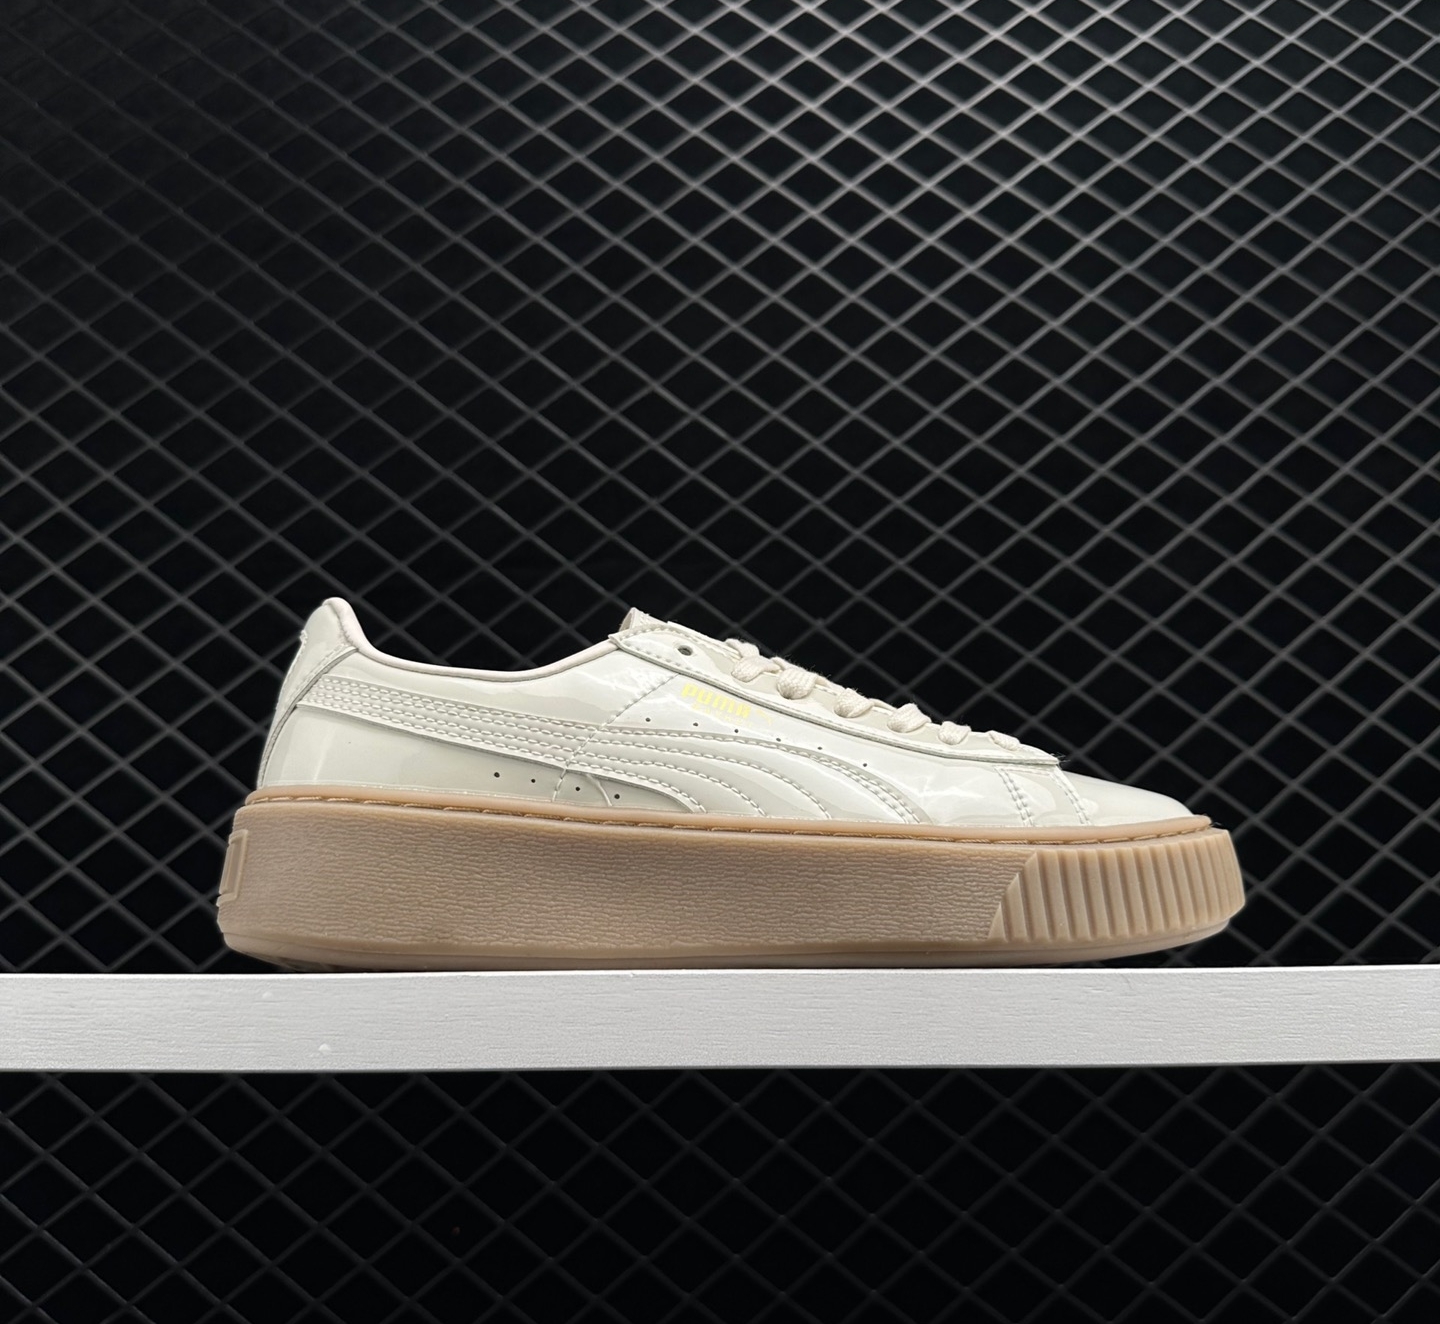 PUMA Basket Platform Core White 364040 01 | Stylish and Comfortable Fashion Sneakers